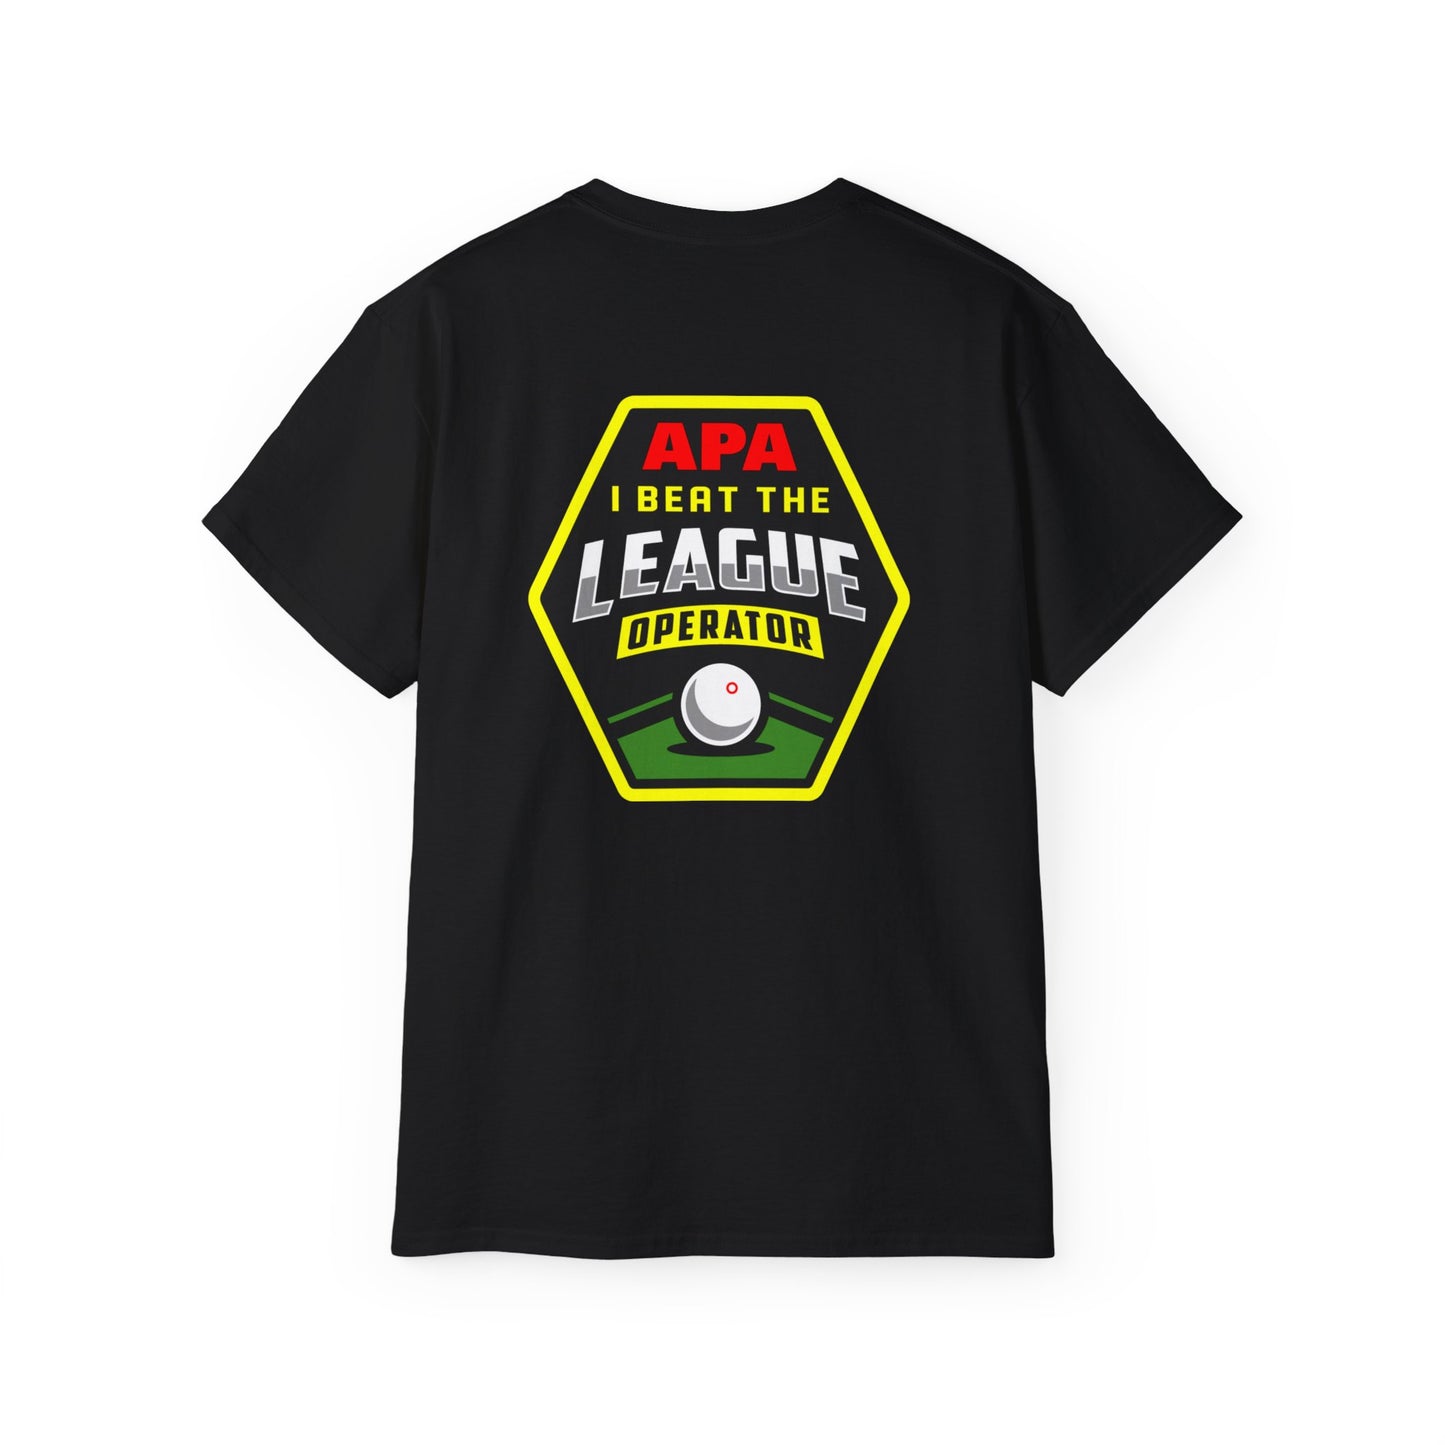 I Beat The League Operator T-Shirt